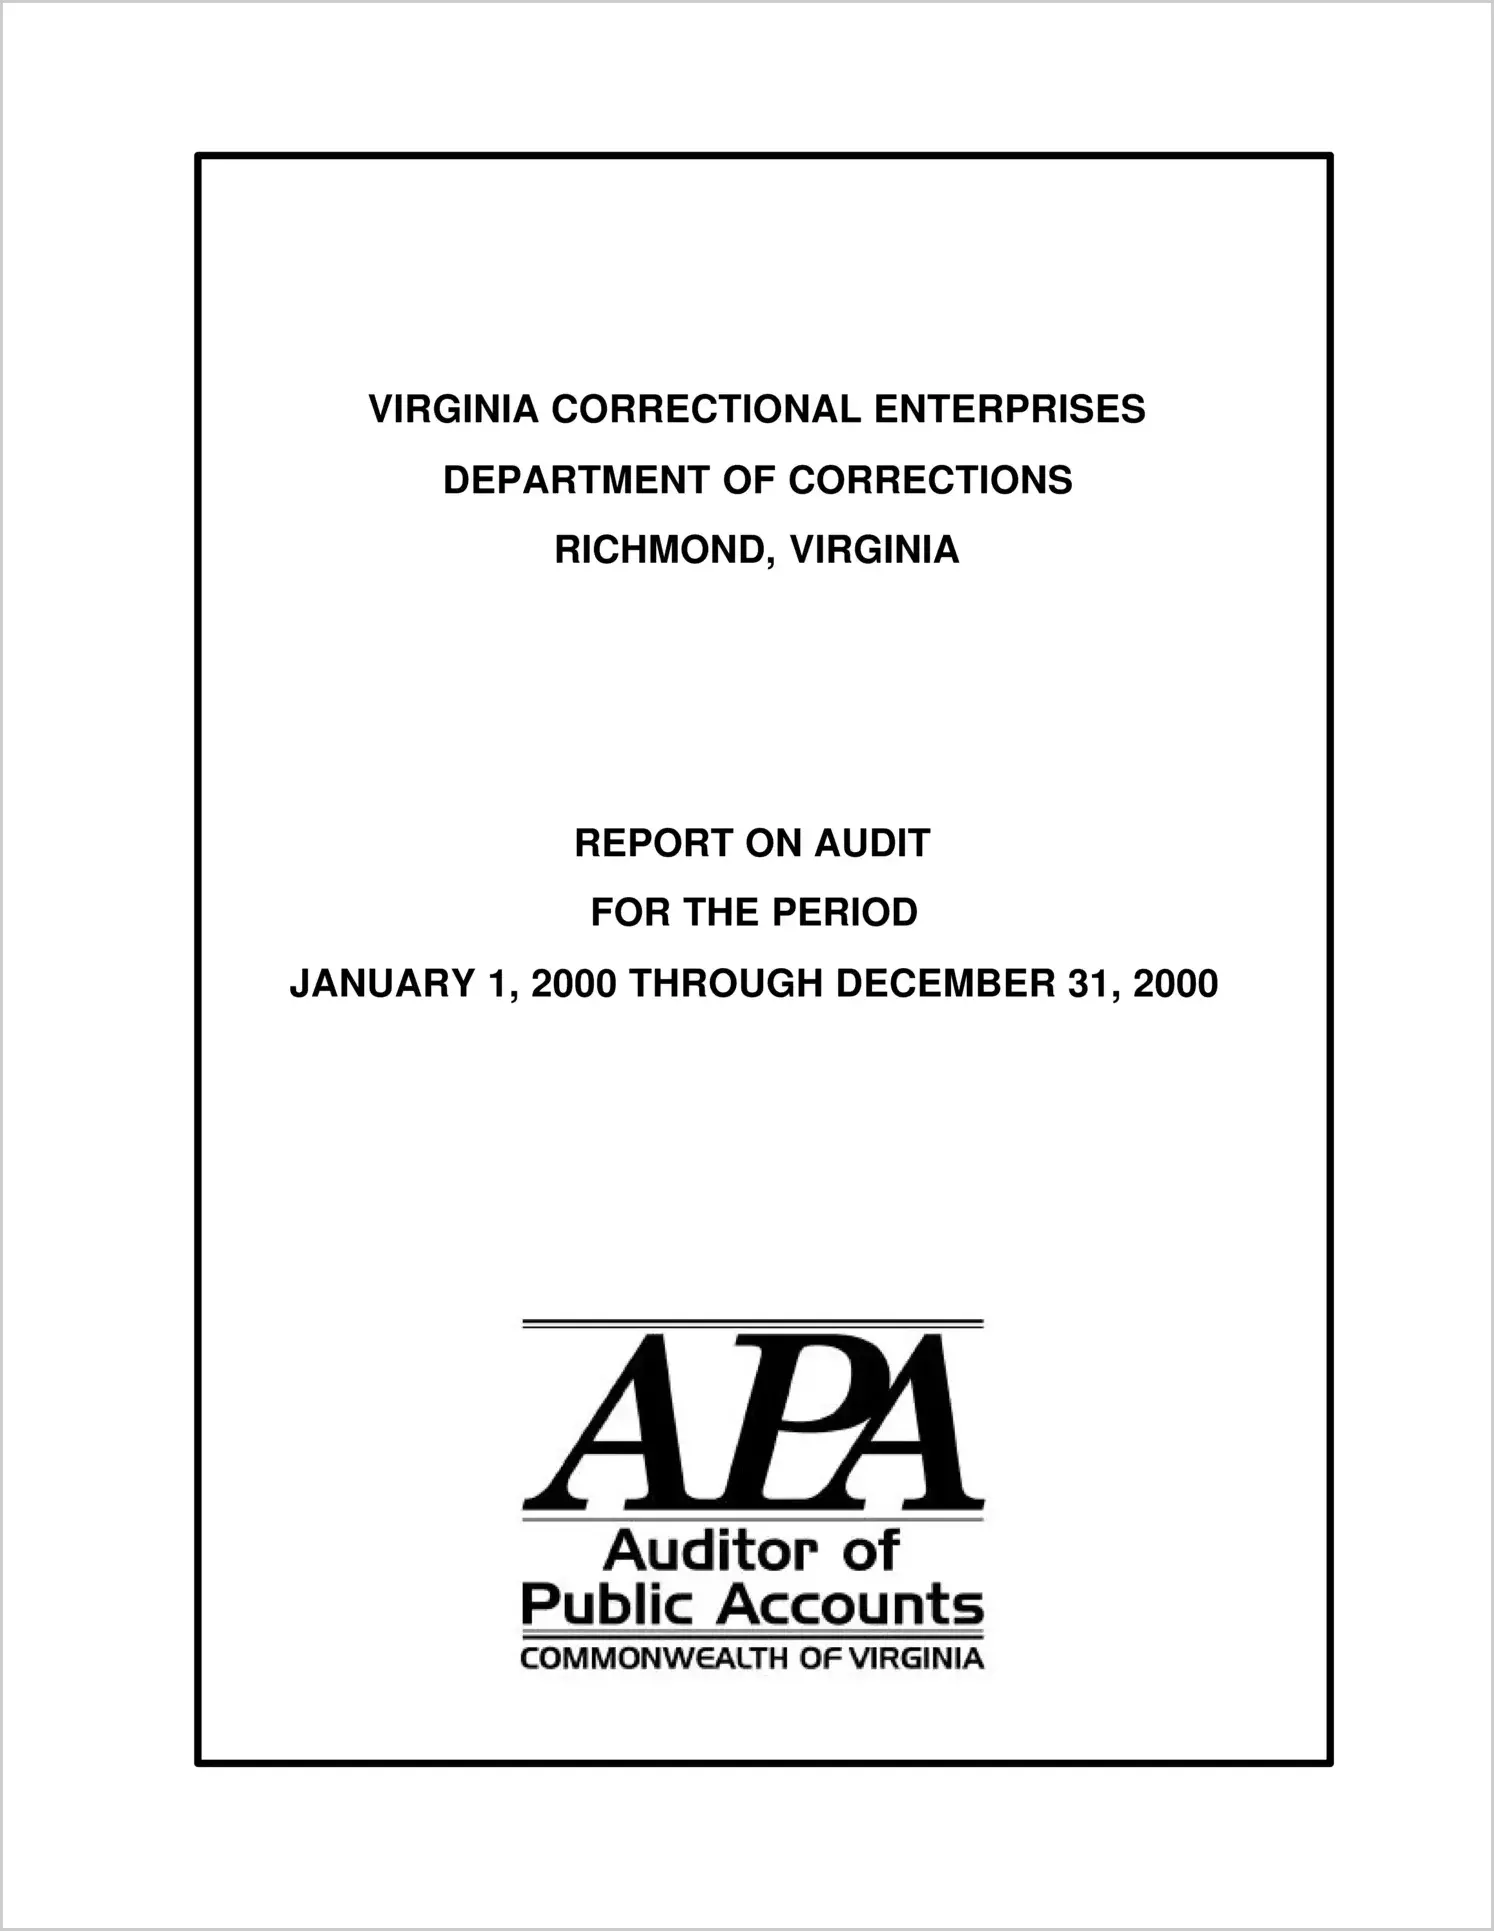 Virginia Correctional Enterprises for the period January 1, 2000 through December 31, 2000